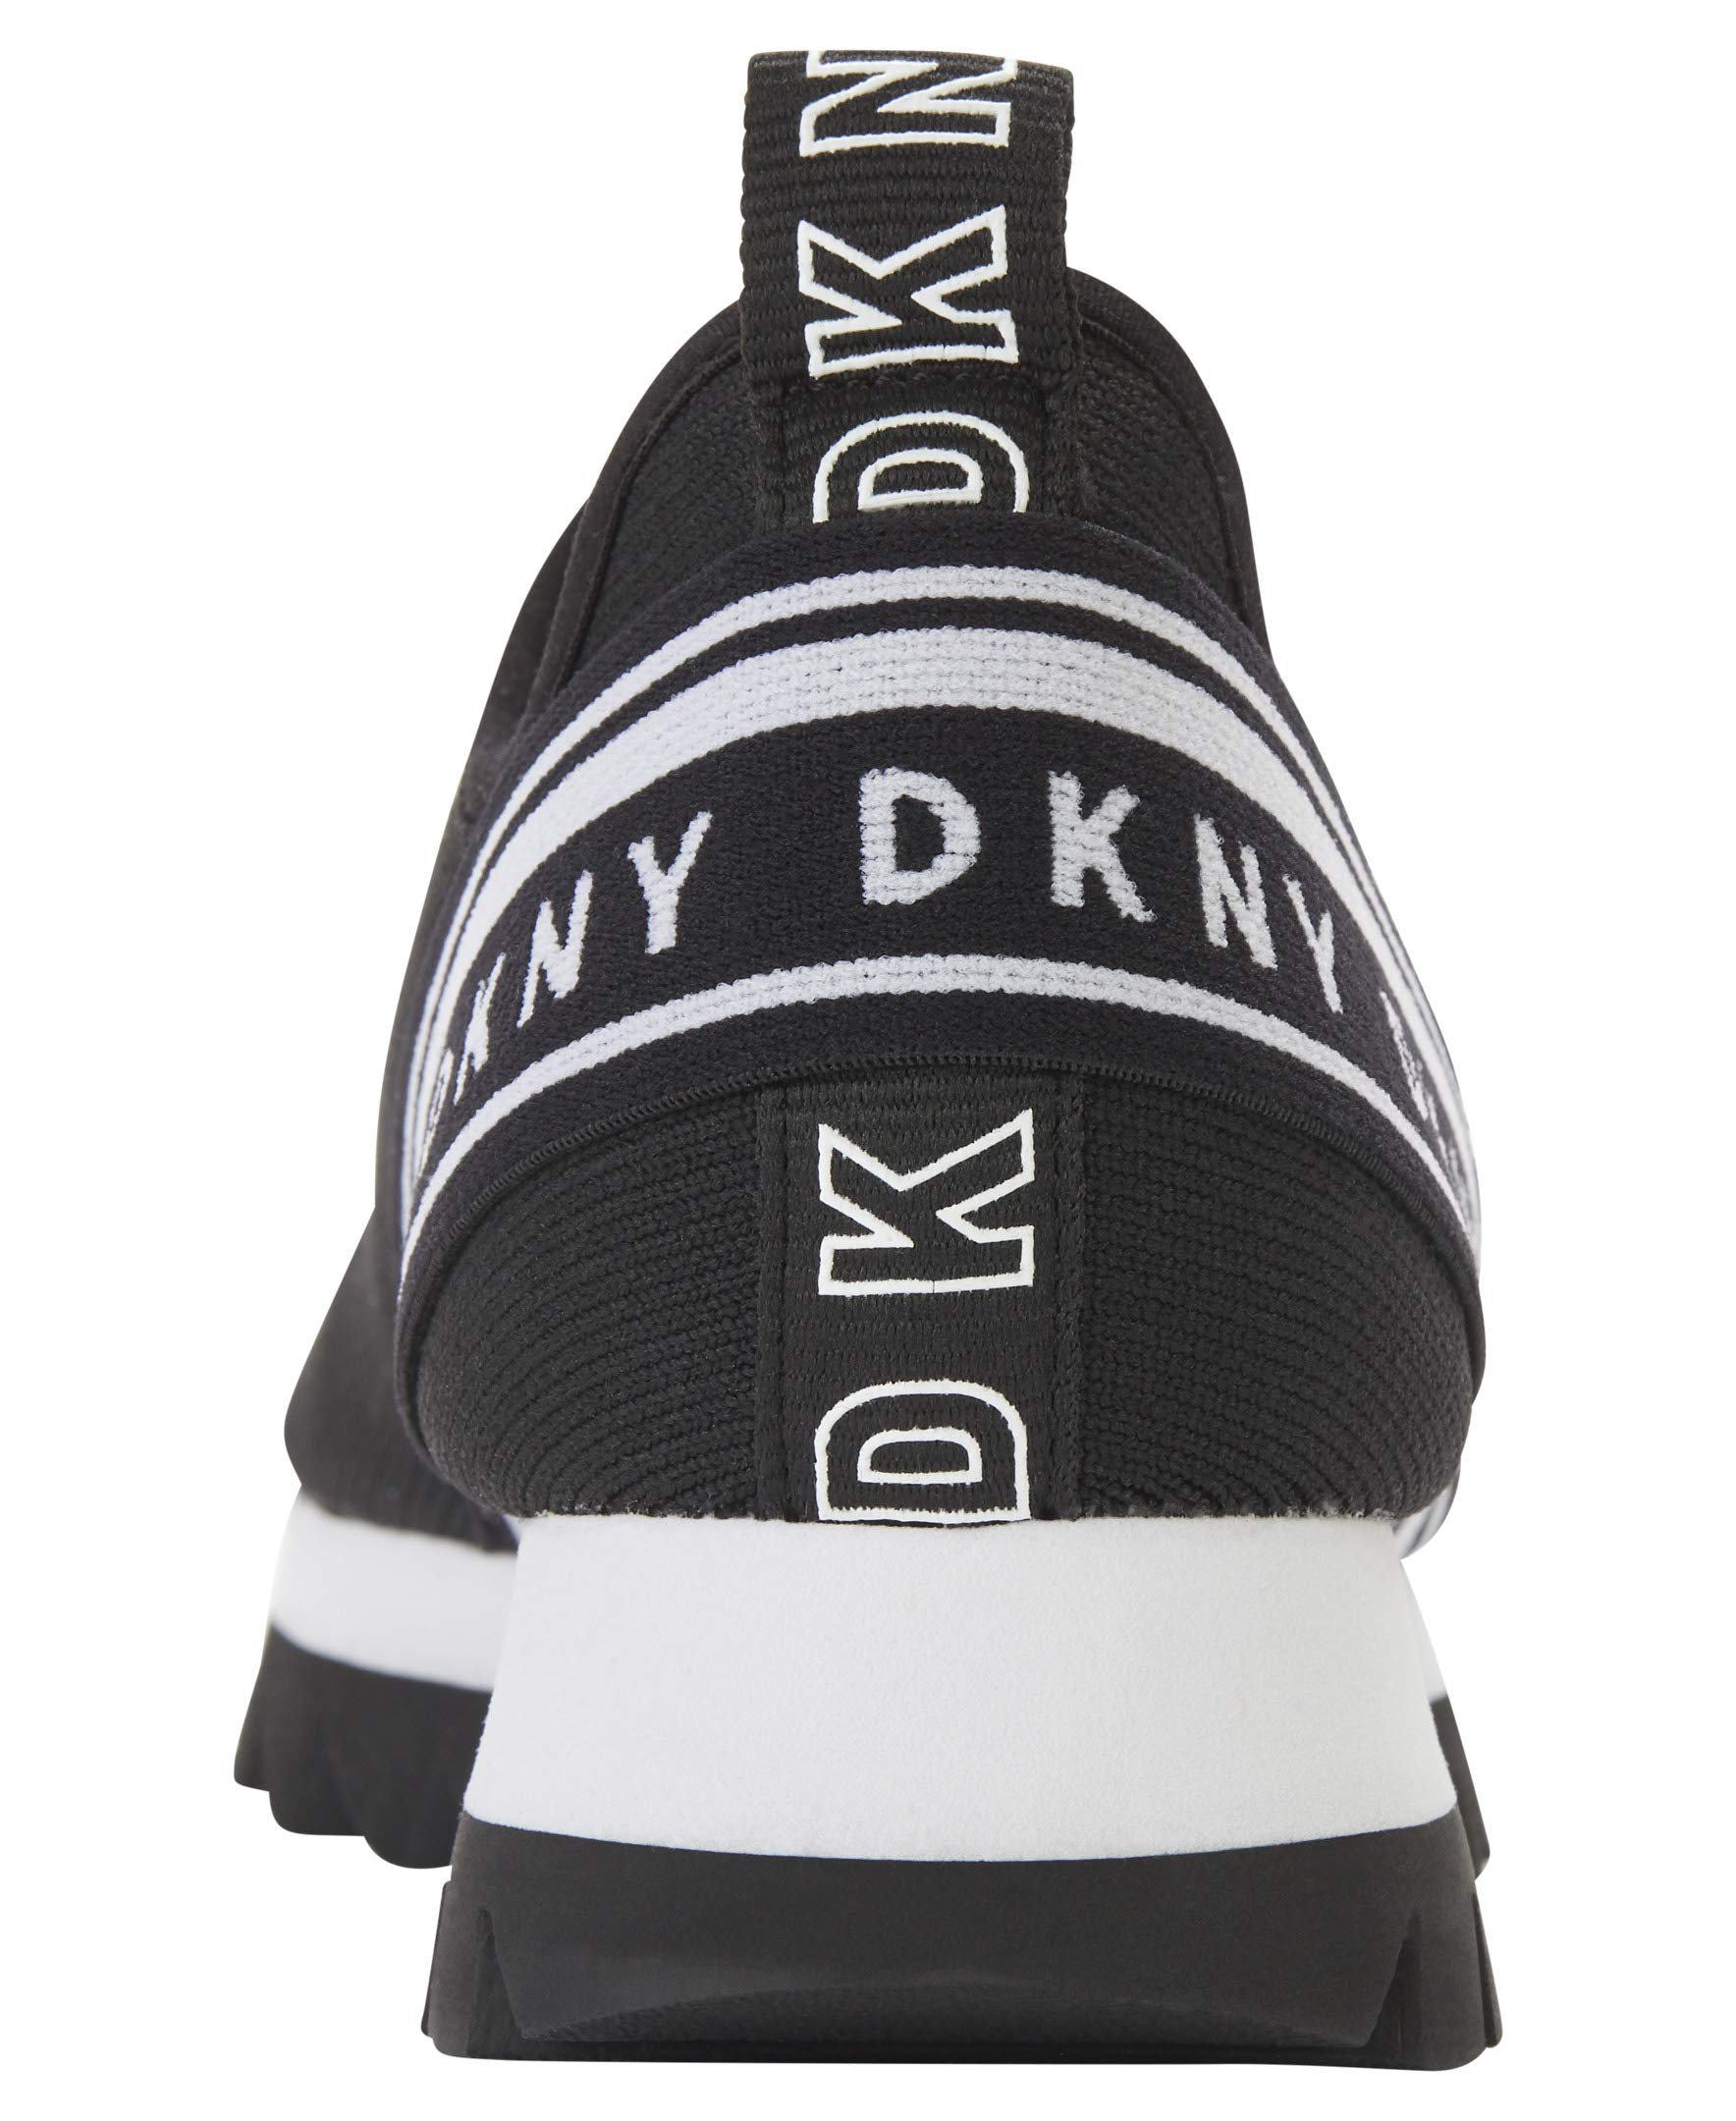 DKNY Women's Lightweight Slip On Comfort Sneaker